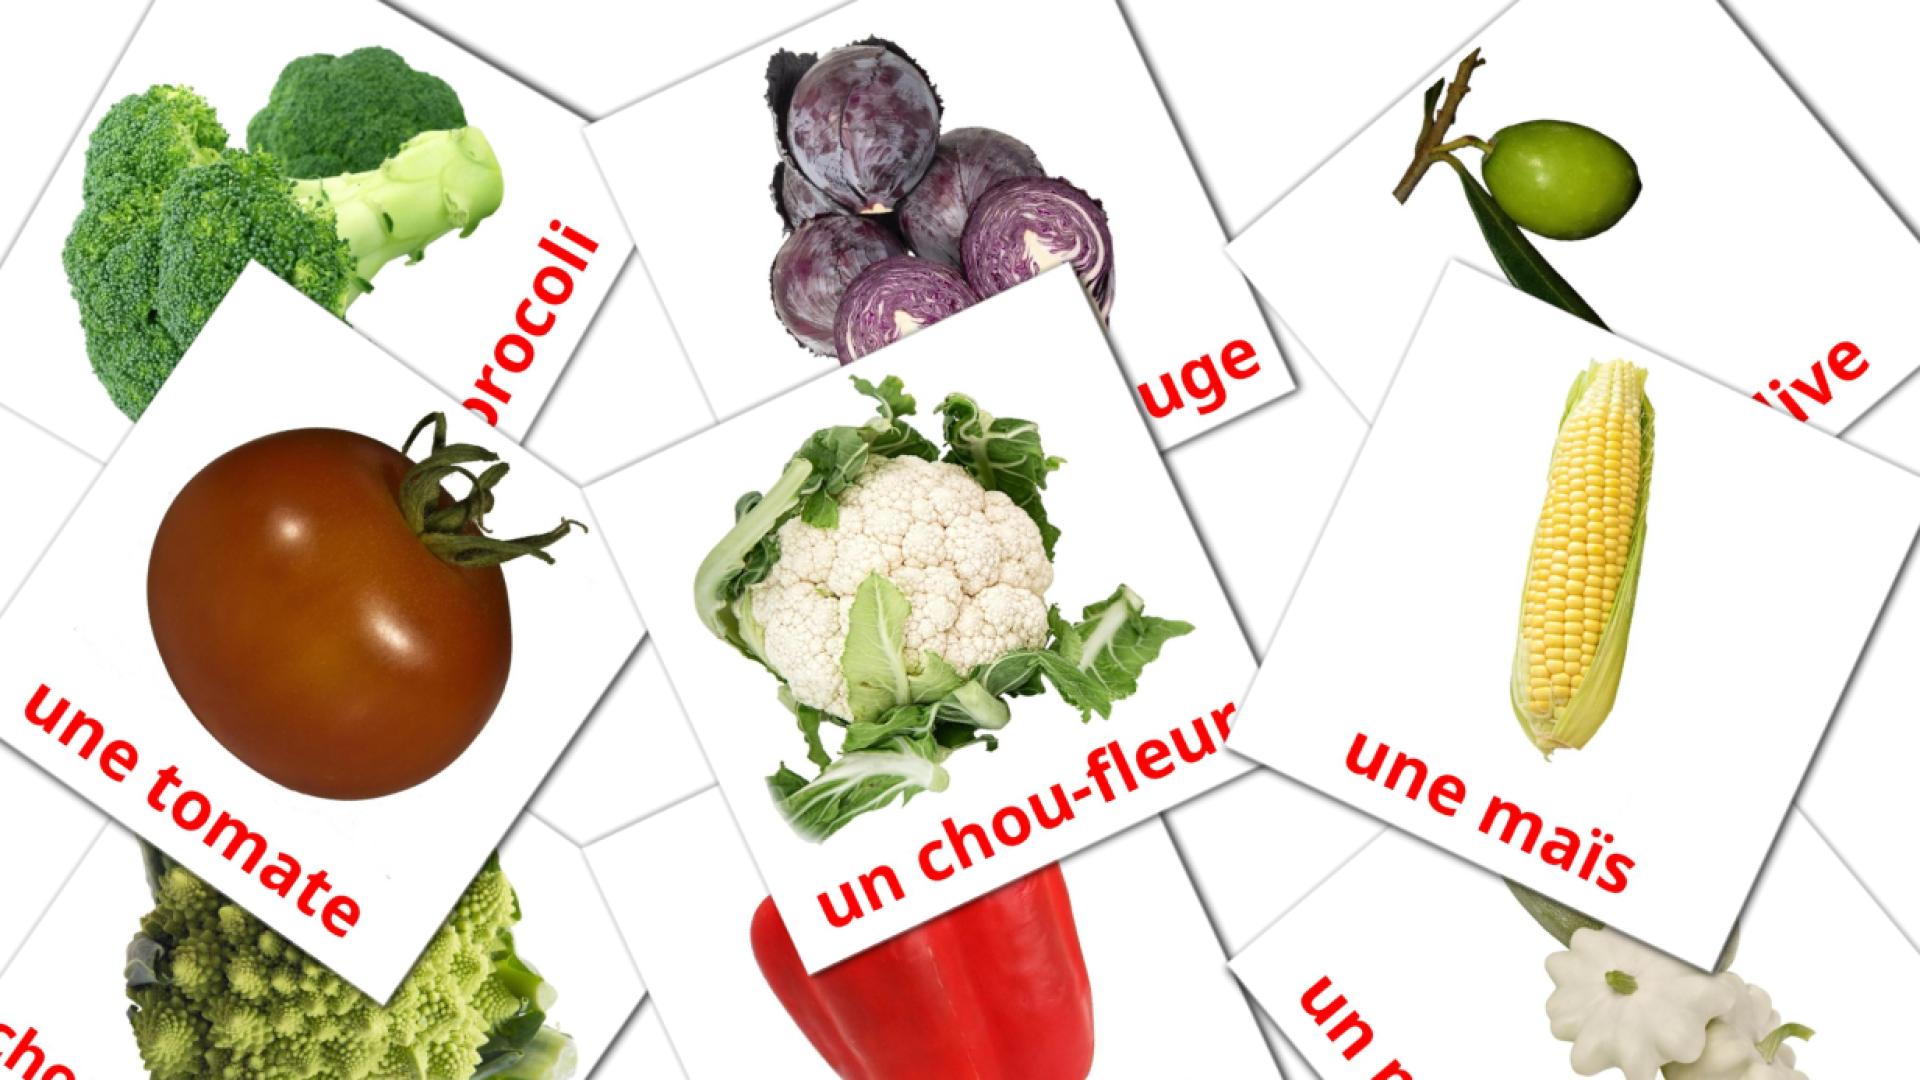 29 Bildkarten für Les Légumes